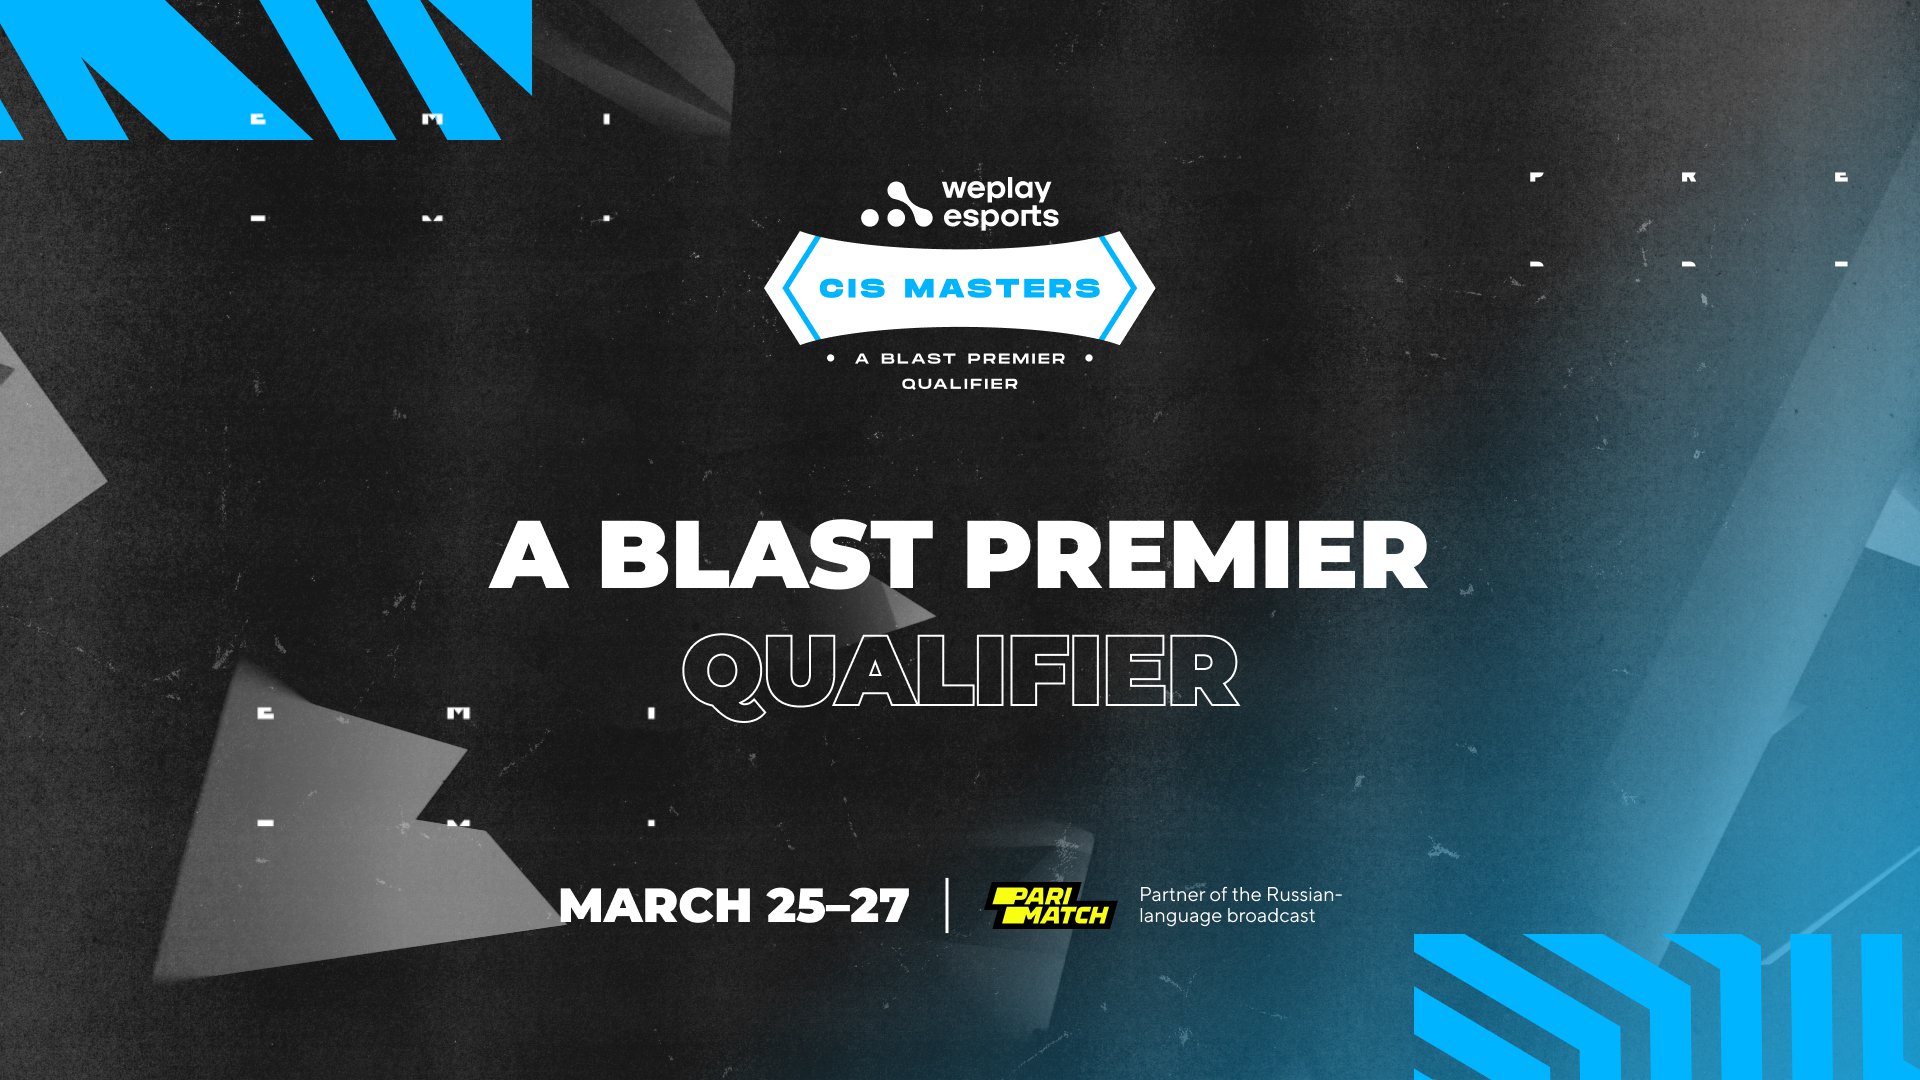 WePlay CIS Masters: квалификация на BLAST Premier для региона СНГ от WePlay Esports. Изображение: WePlay Holding